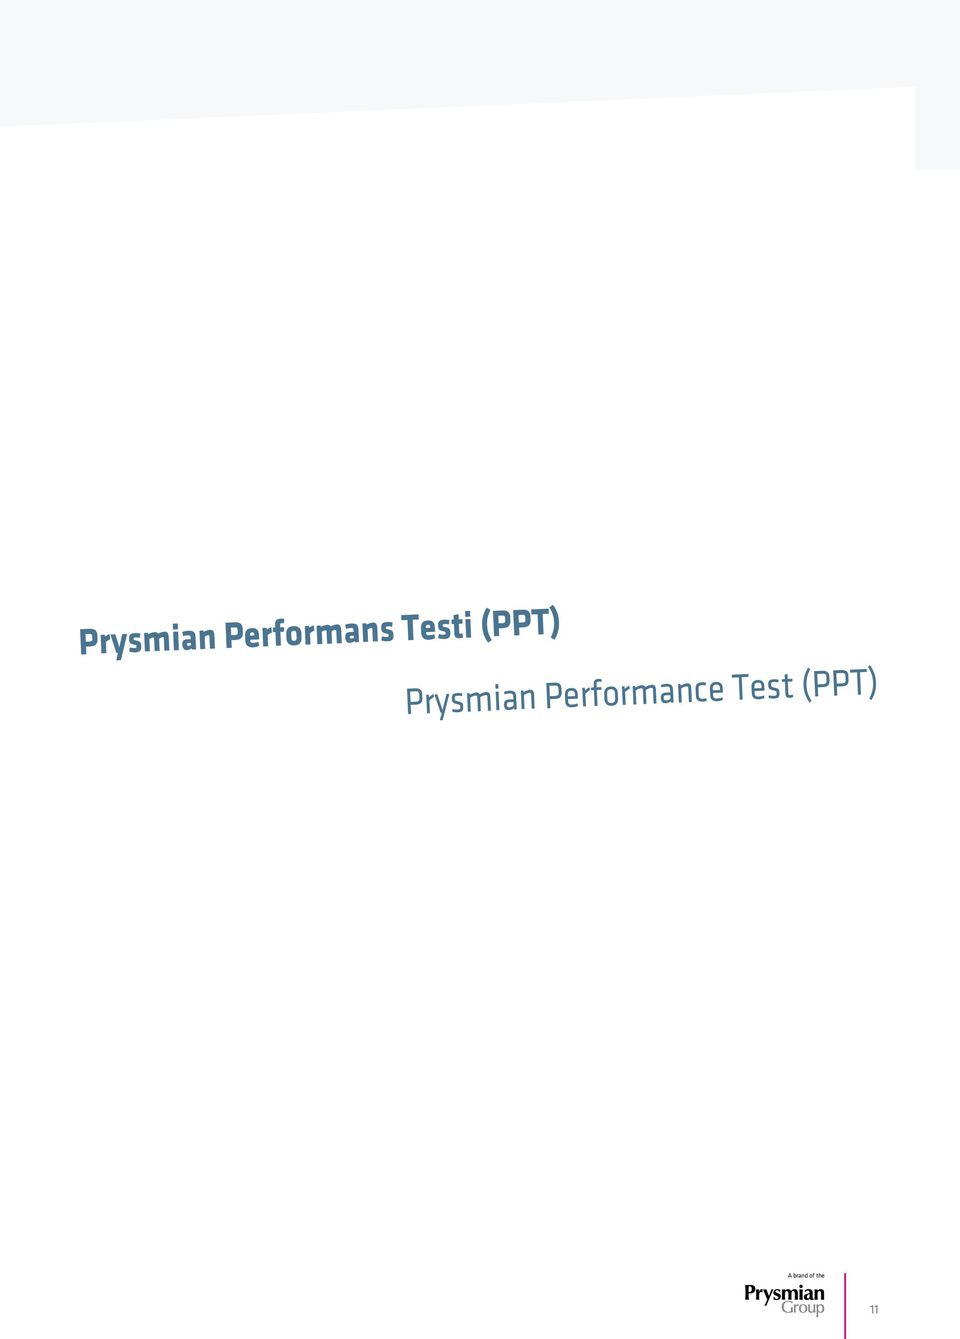 Performans Testi (PPT)